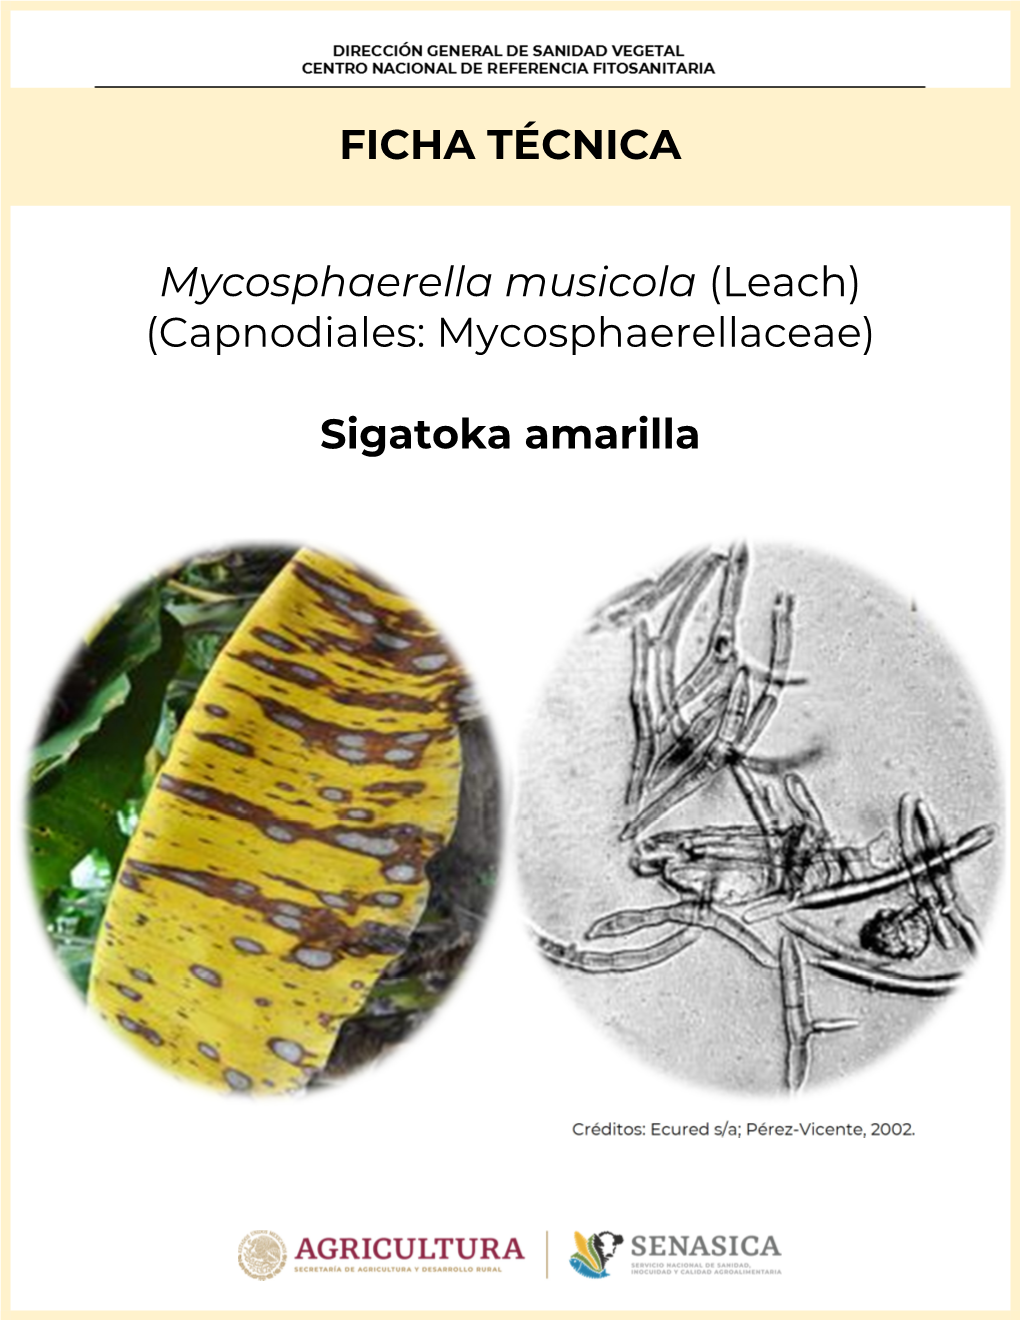 FICHA TÉCNICA Mycosphaerella Musicola (Leach) (Capnodiales: Mycosphaerellaceae) Sigatoka Amarilla